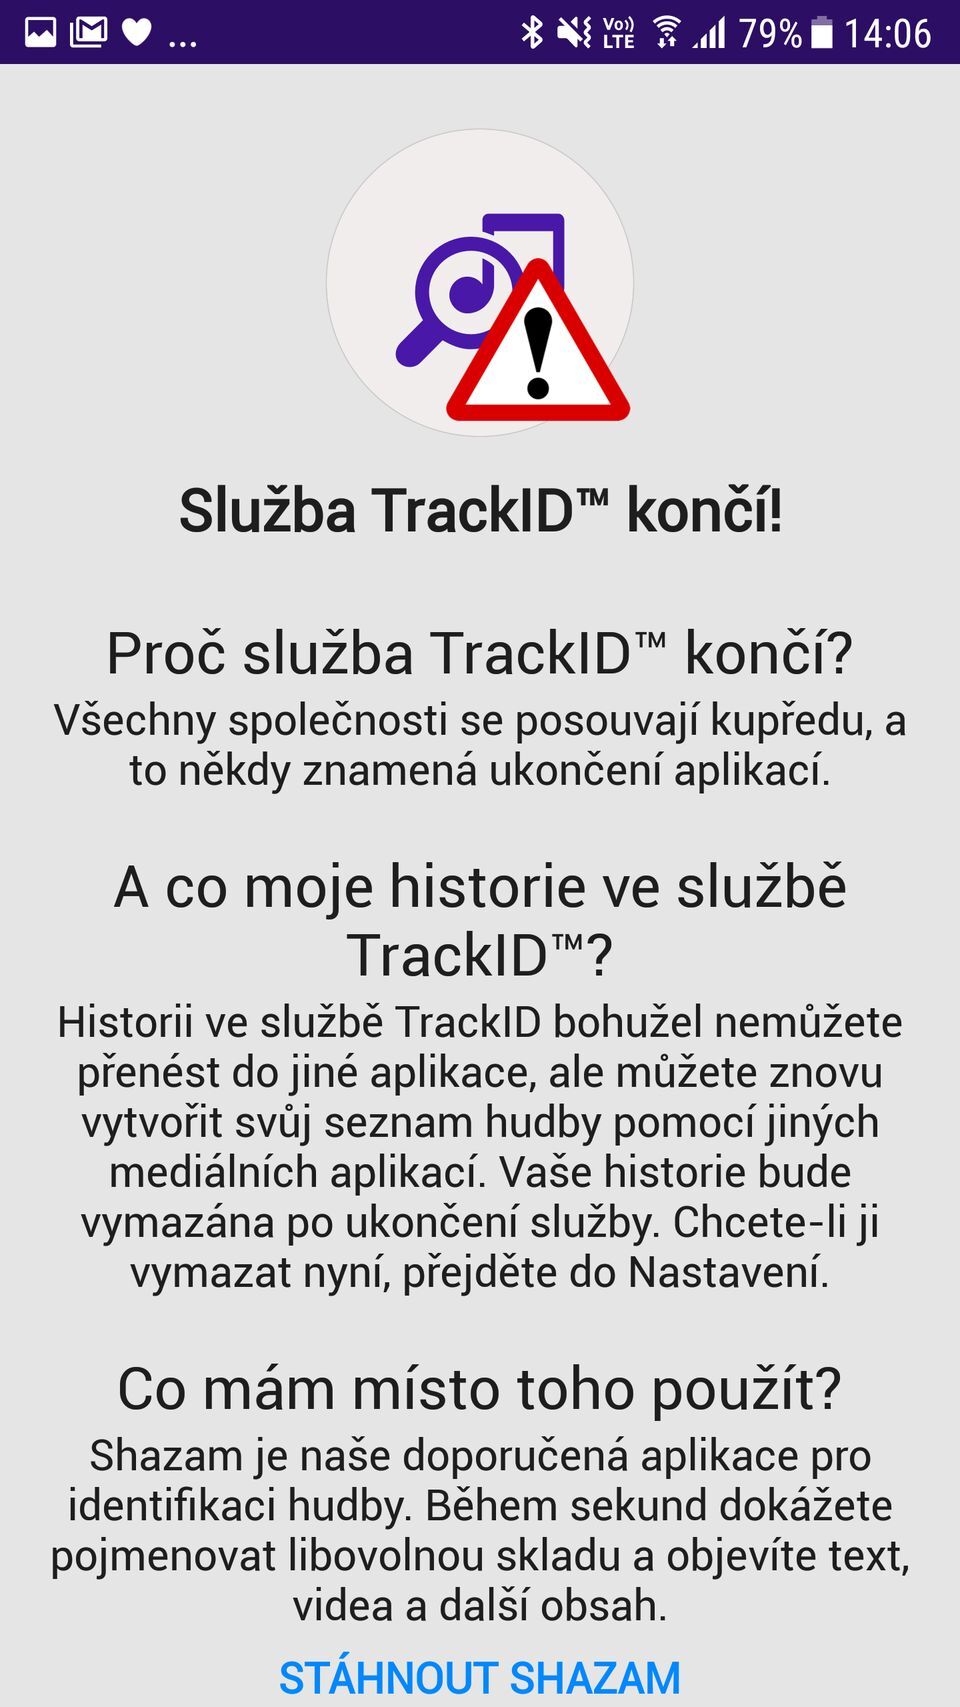 TrackID